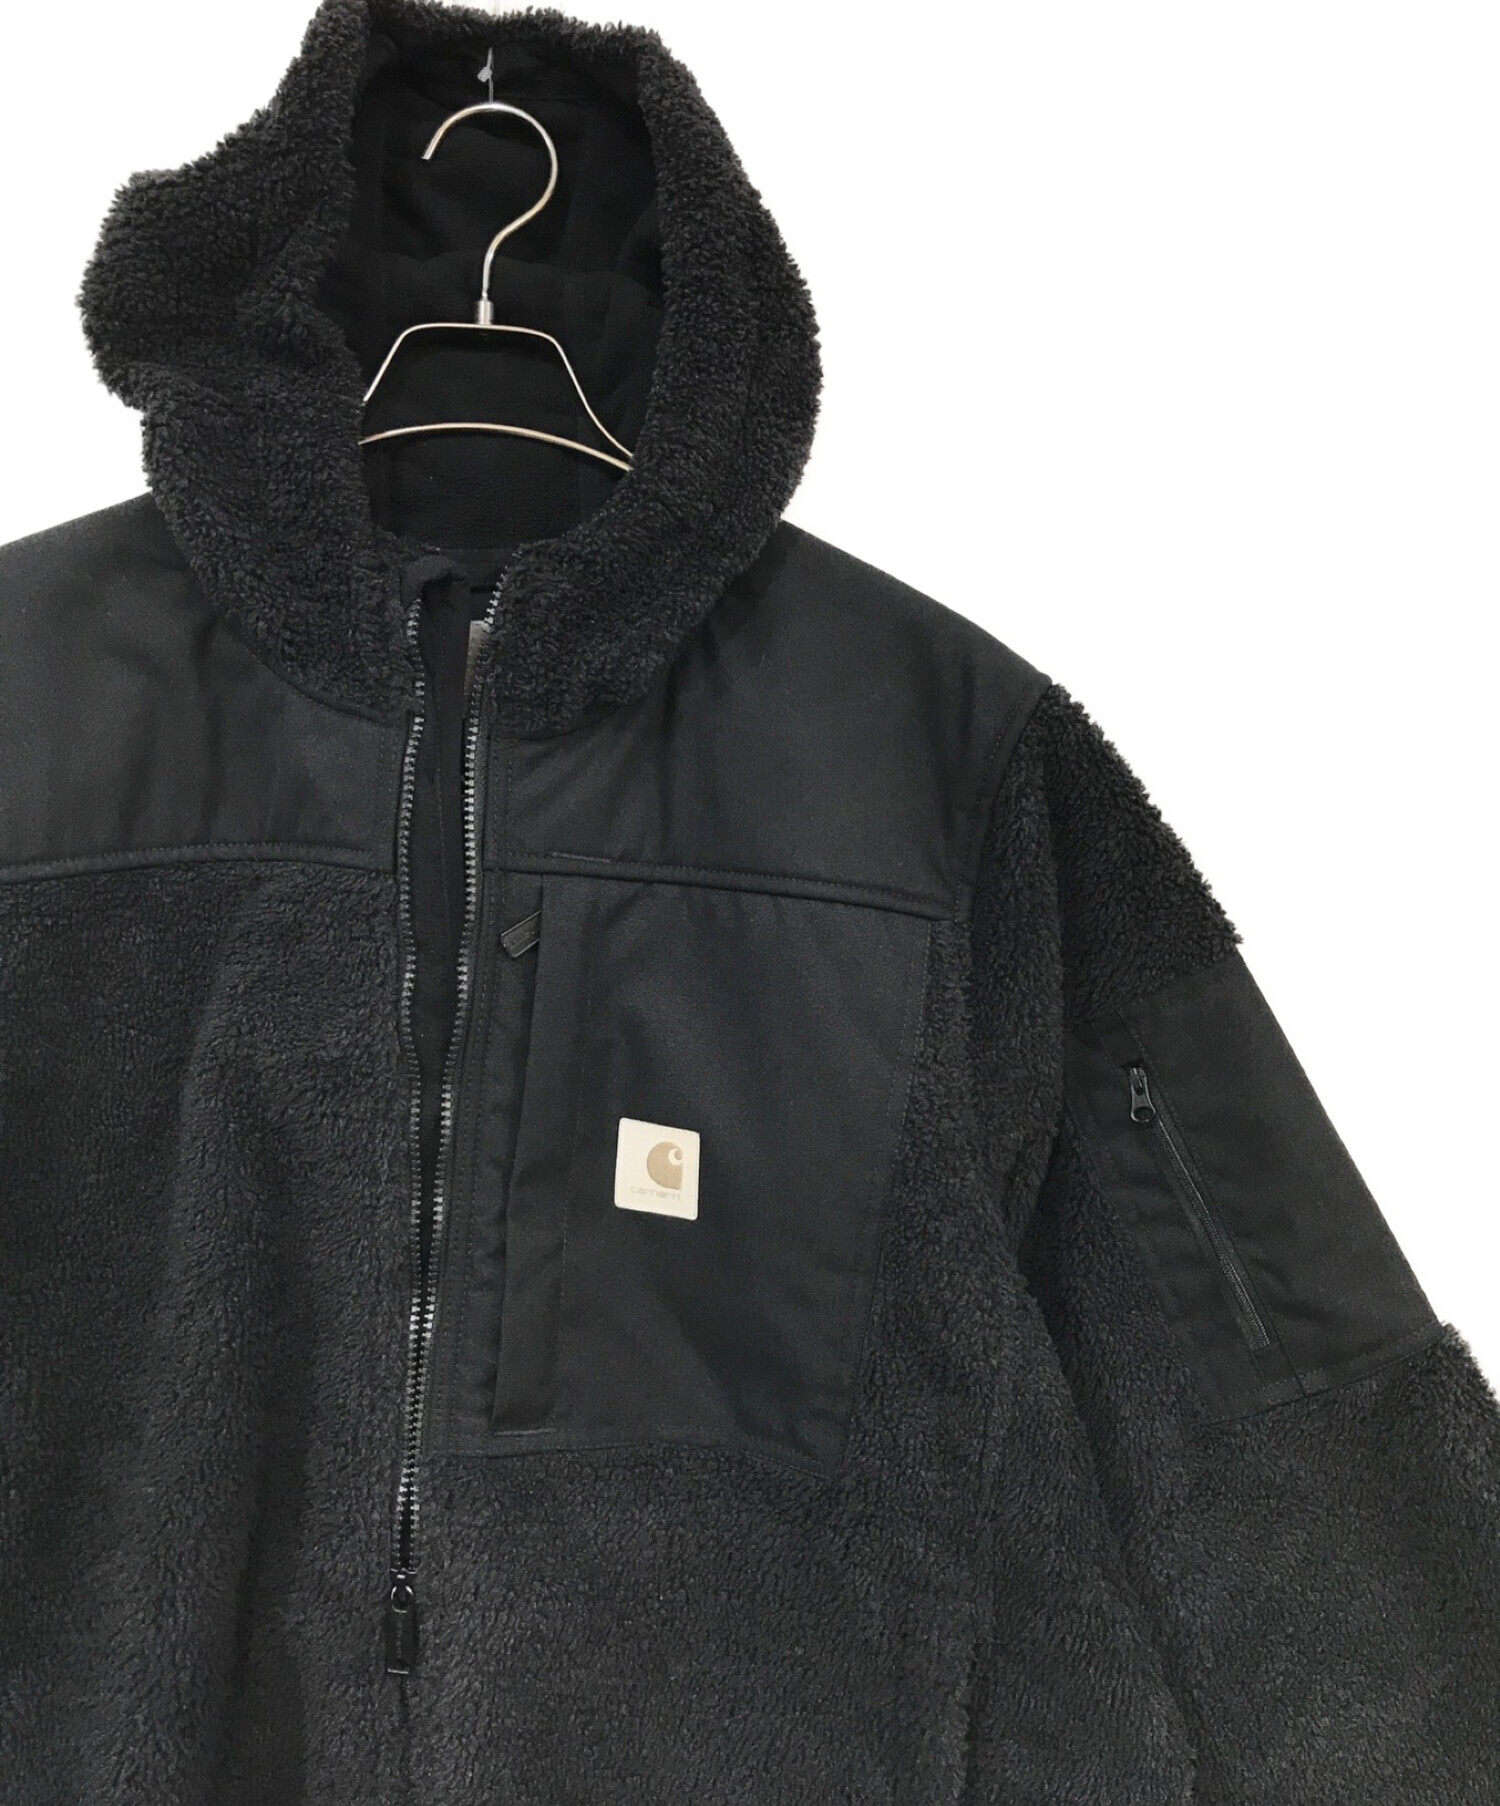 CarHartt (カーハート) フリースジャケット ブラック サイズ:L